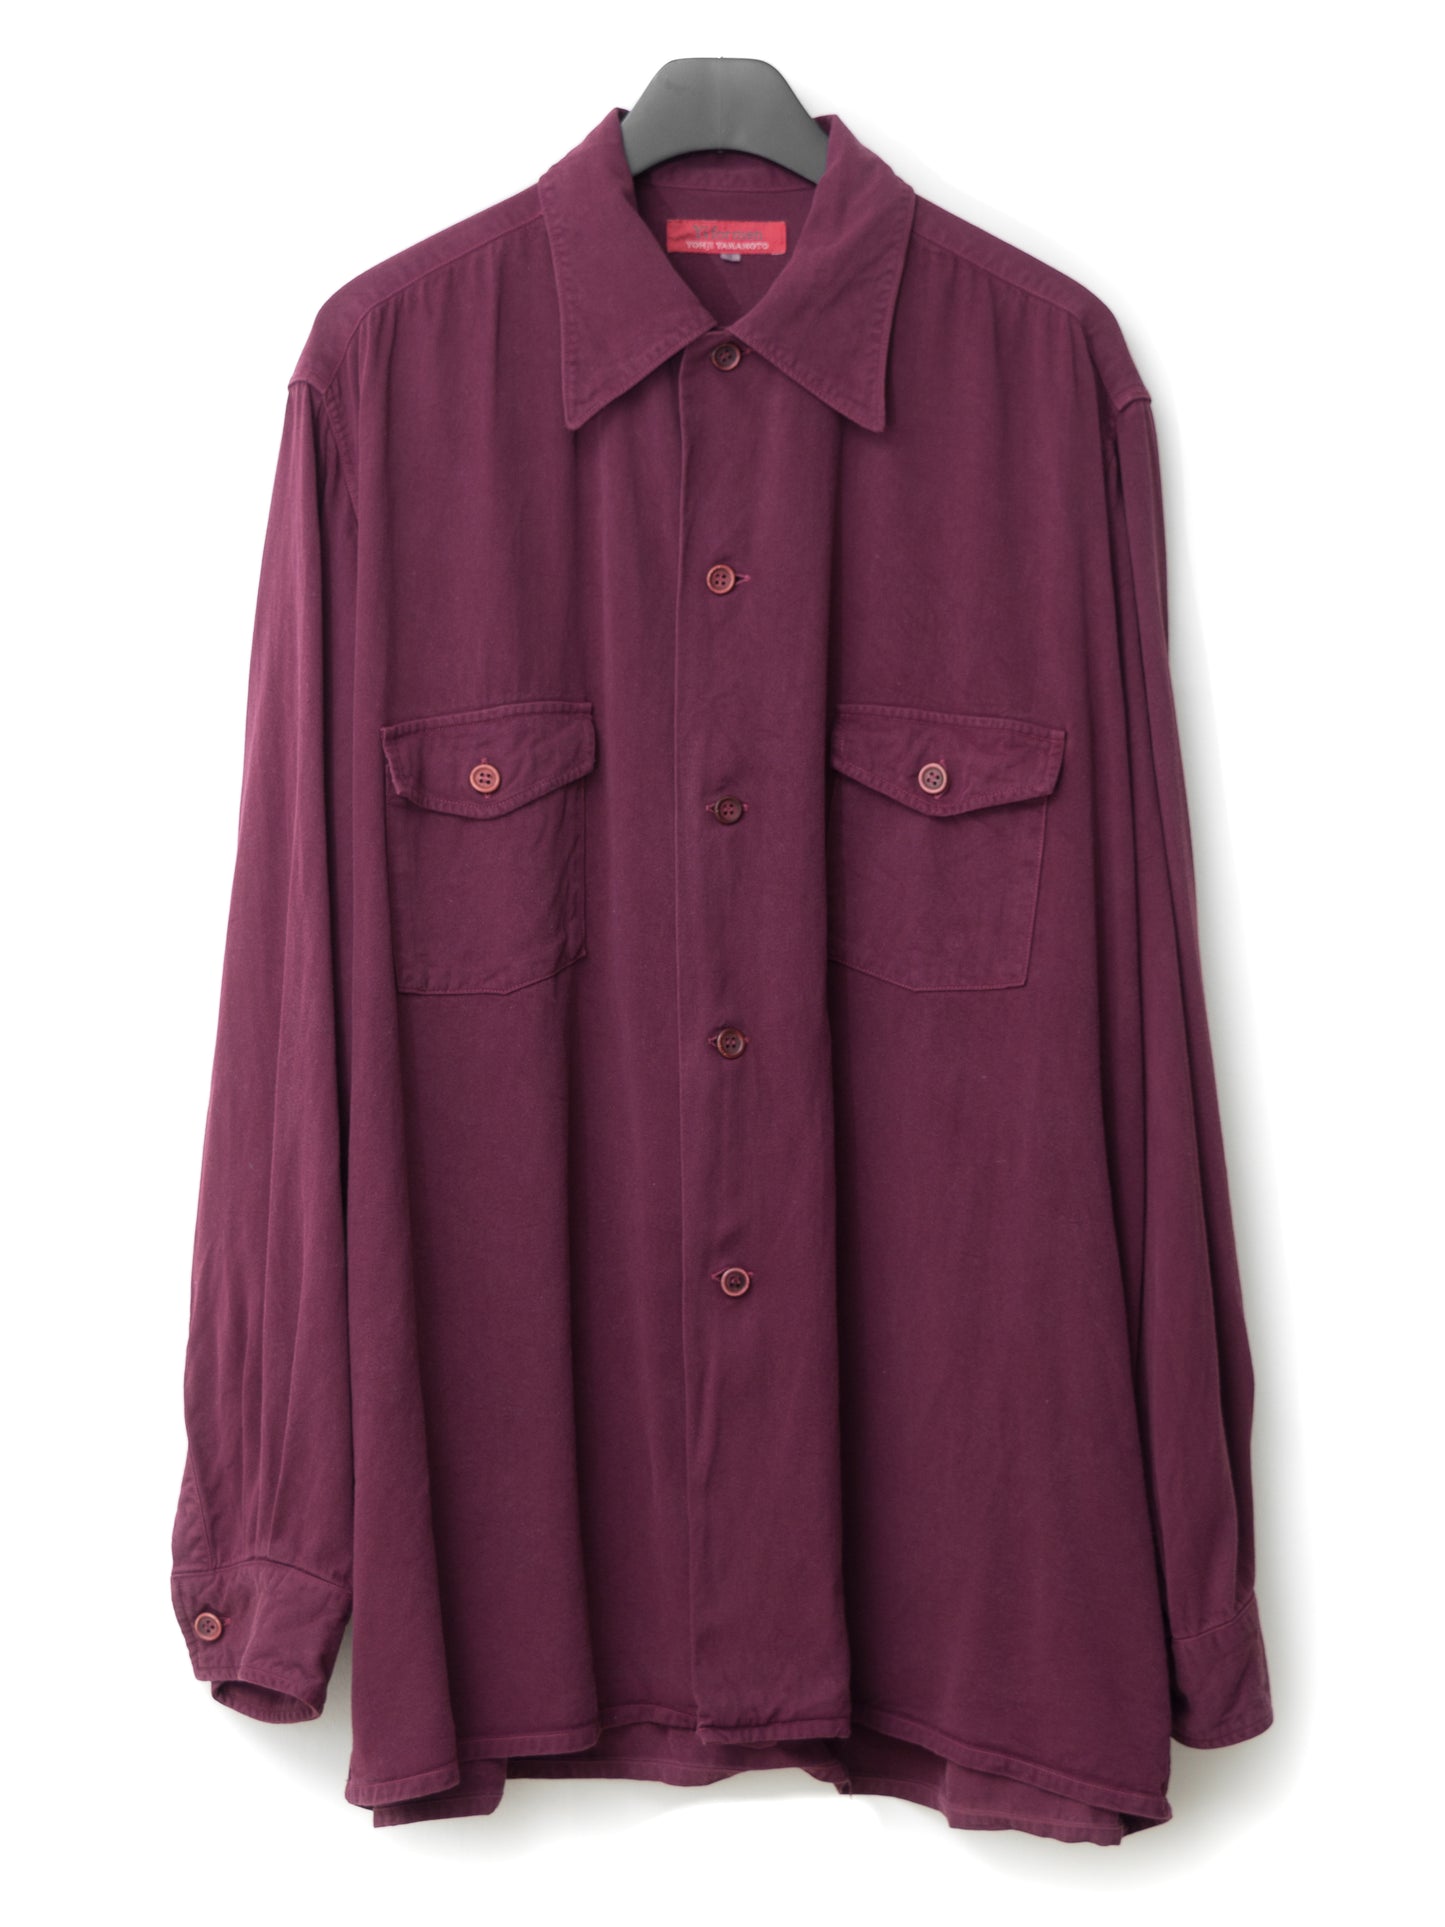 s/s 03 garment dyed overshirt merlot ∙ rayon ∙ small